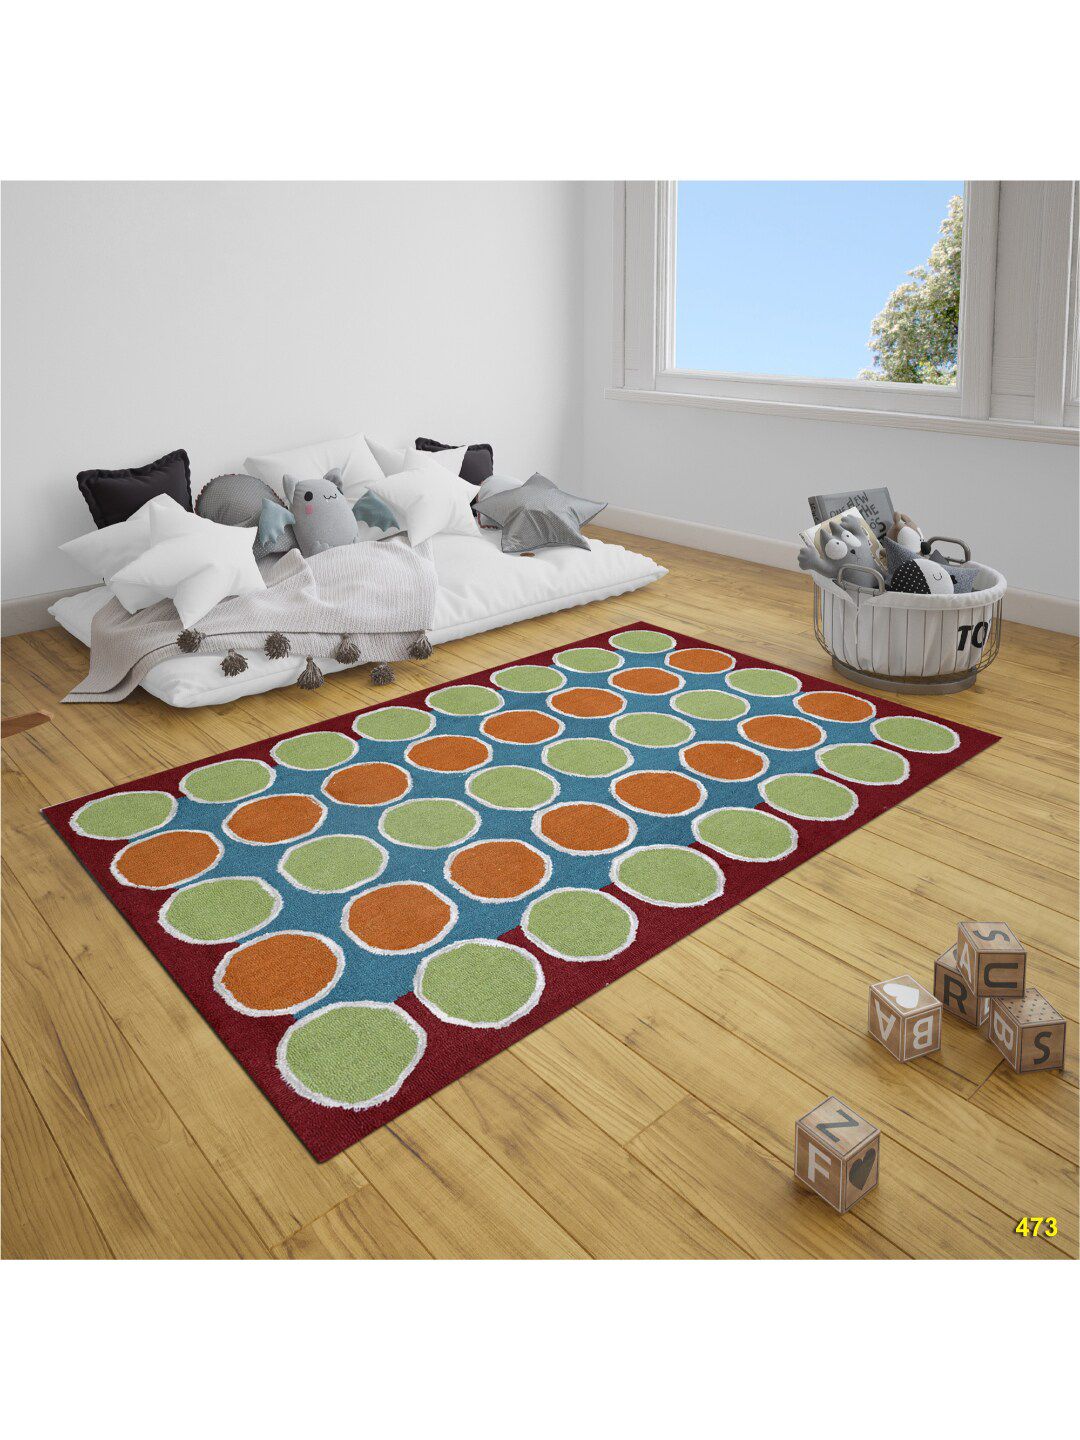 SANDED EDGE Multicolored Geometric Woolen Floor Carpets Price in India